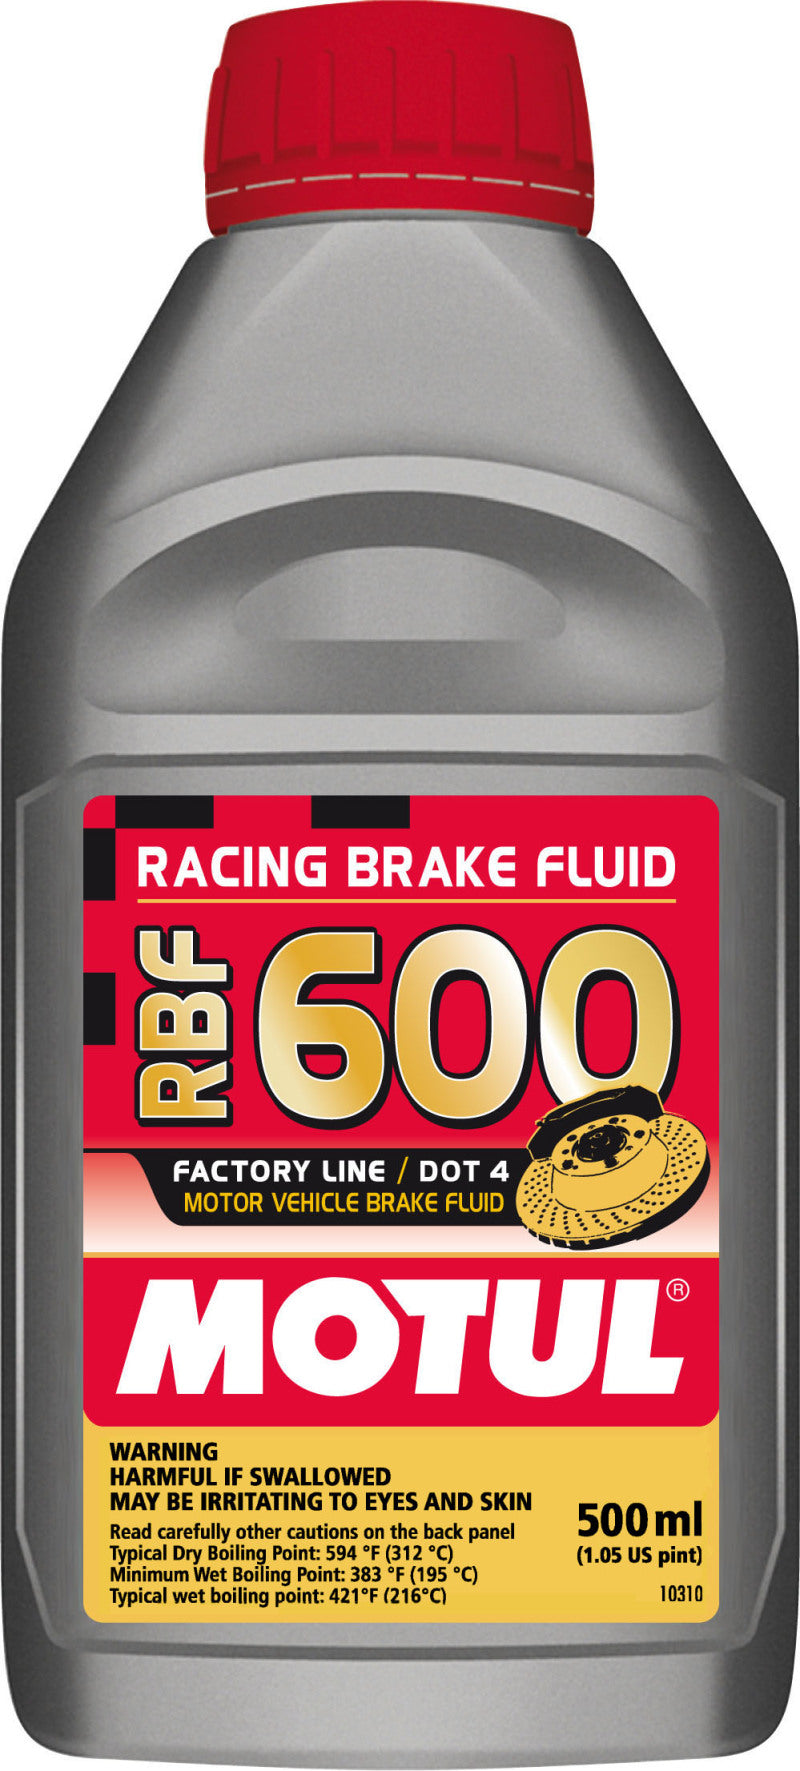 Motul mot100949 1/2L Brake Fluid RBF 600 - Racing DOT 4 on Bleeding Tarmac